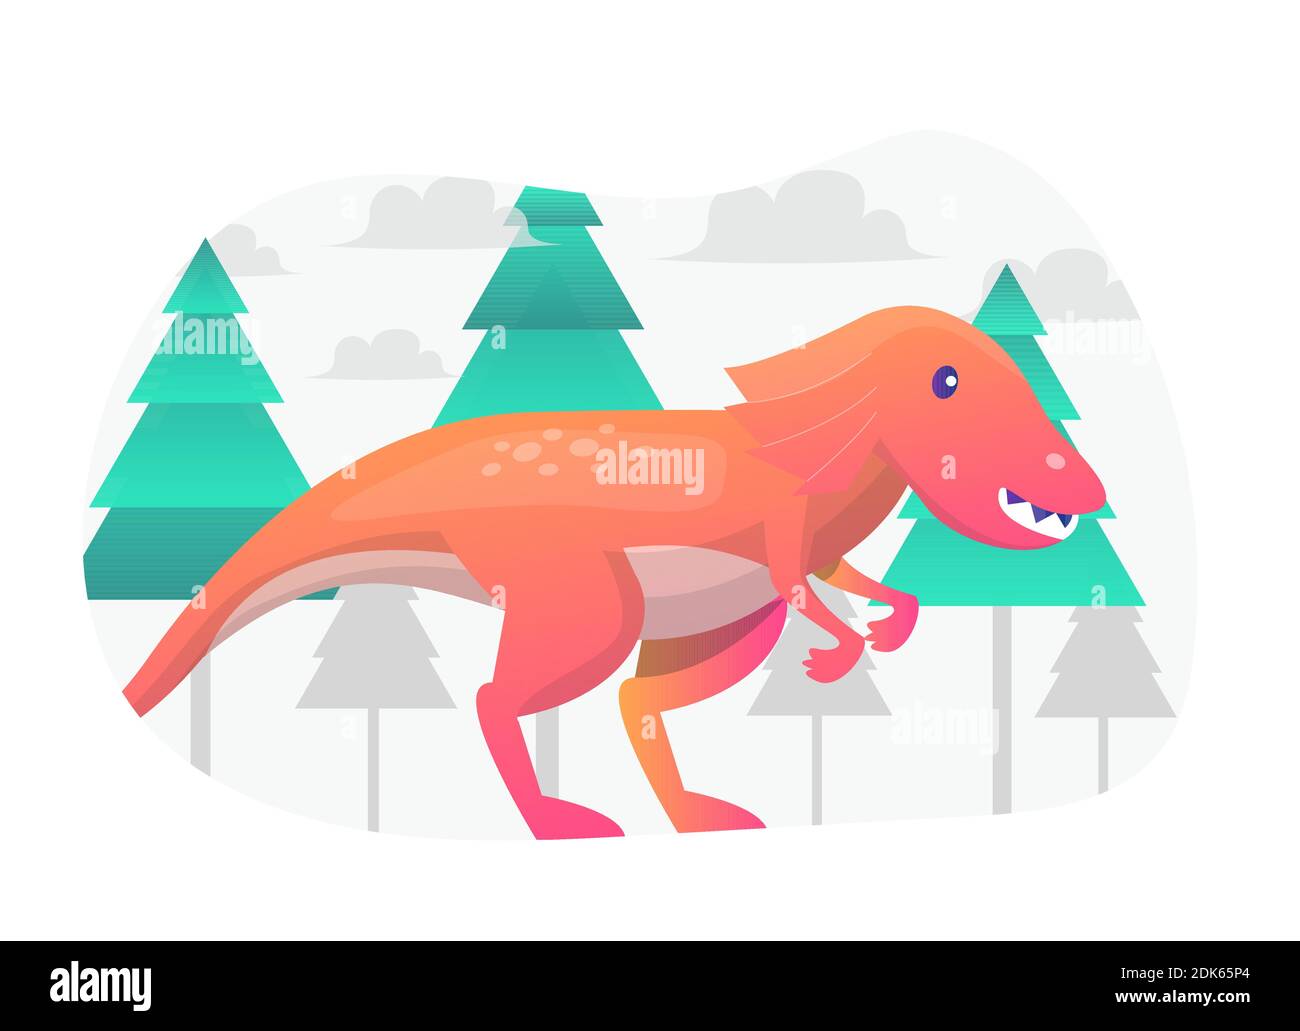 Dinousaur Concept Flat Illustration Vector Graphic. Illustrazione Vettoriale